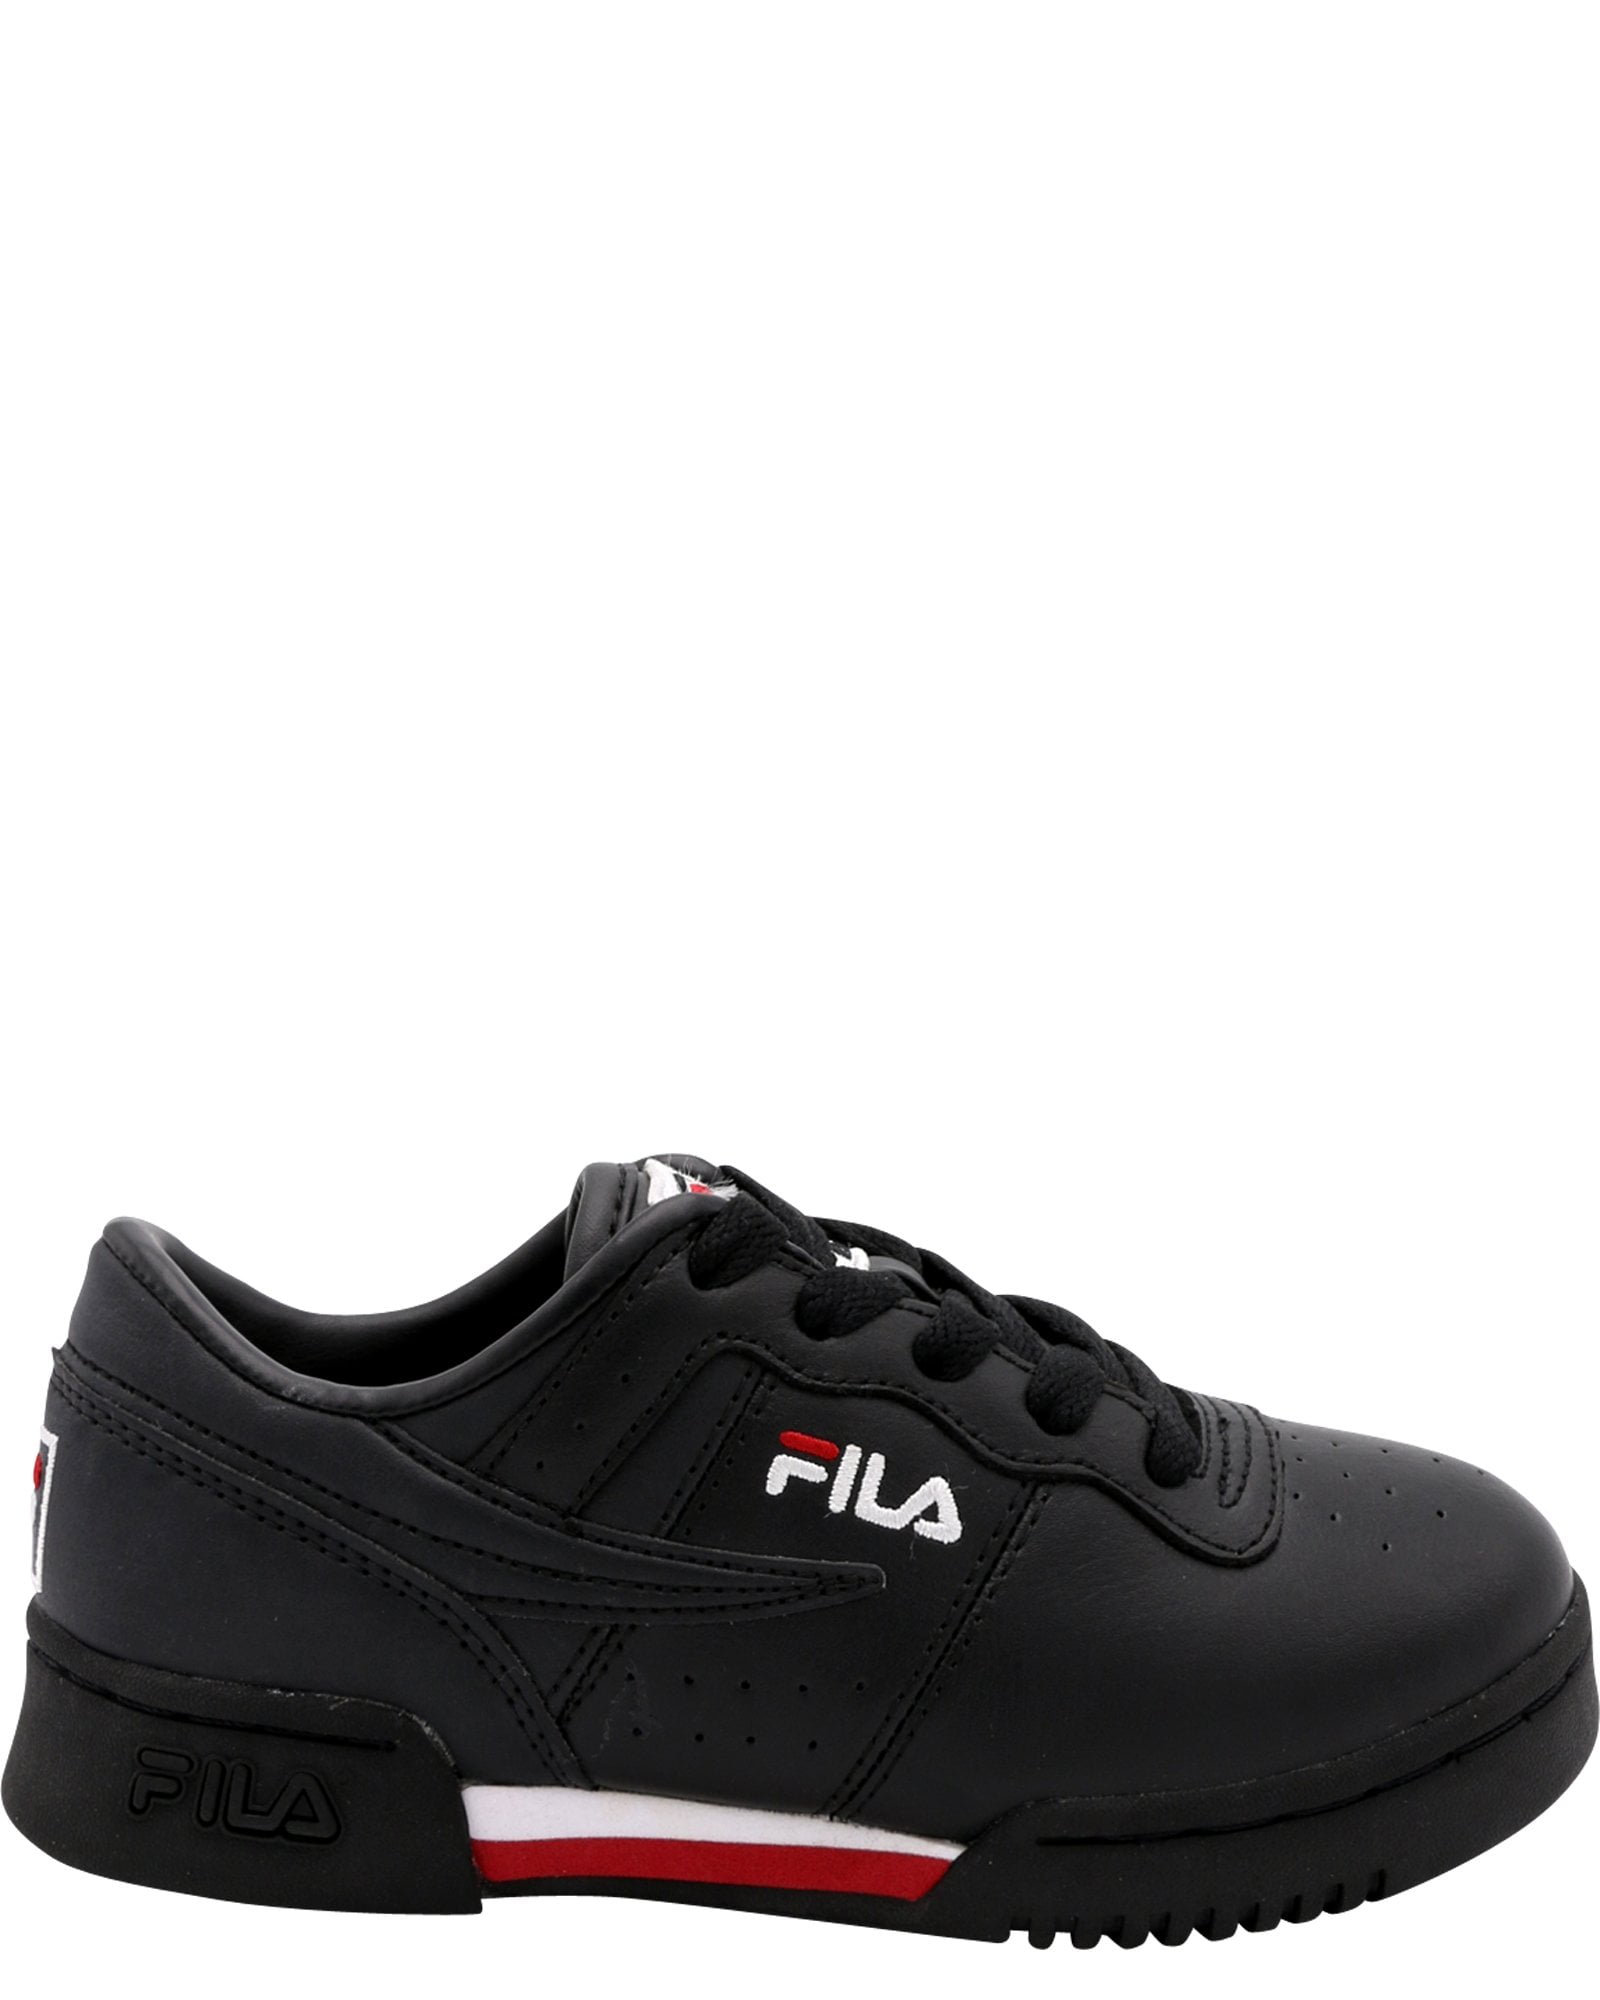 fila shoes low cut